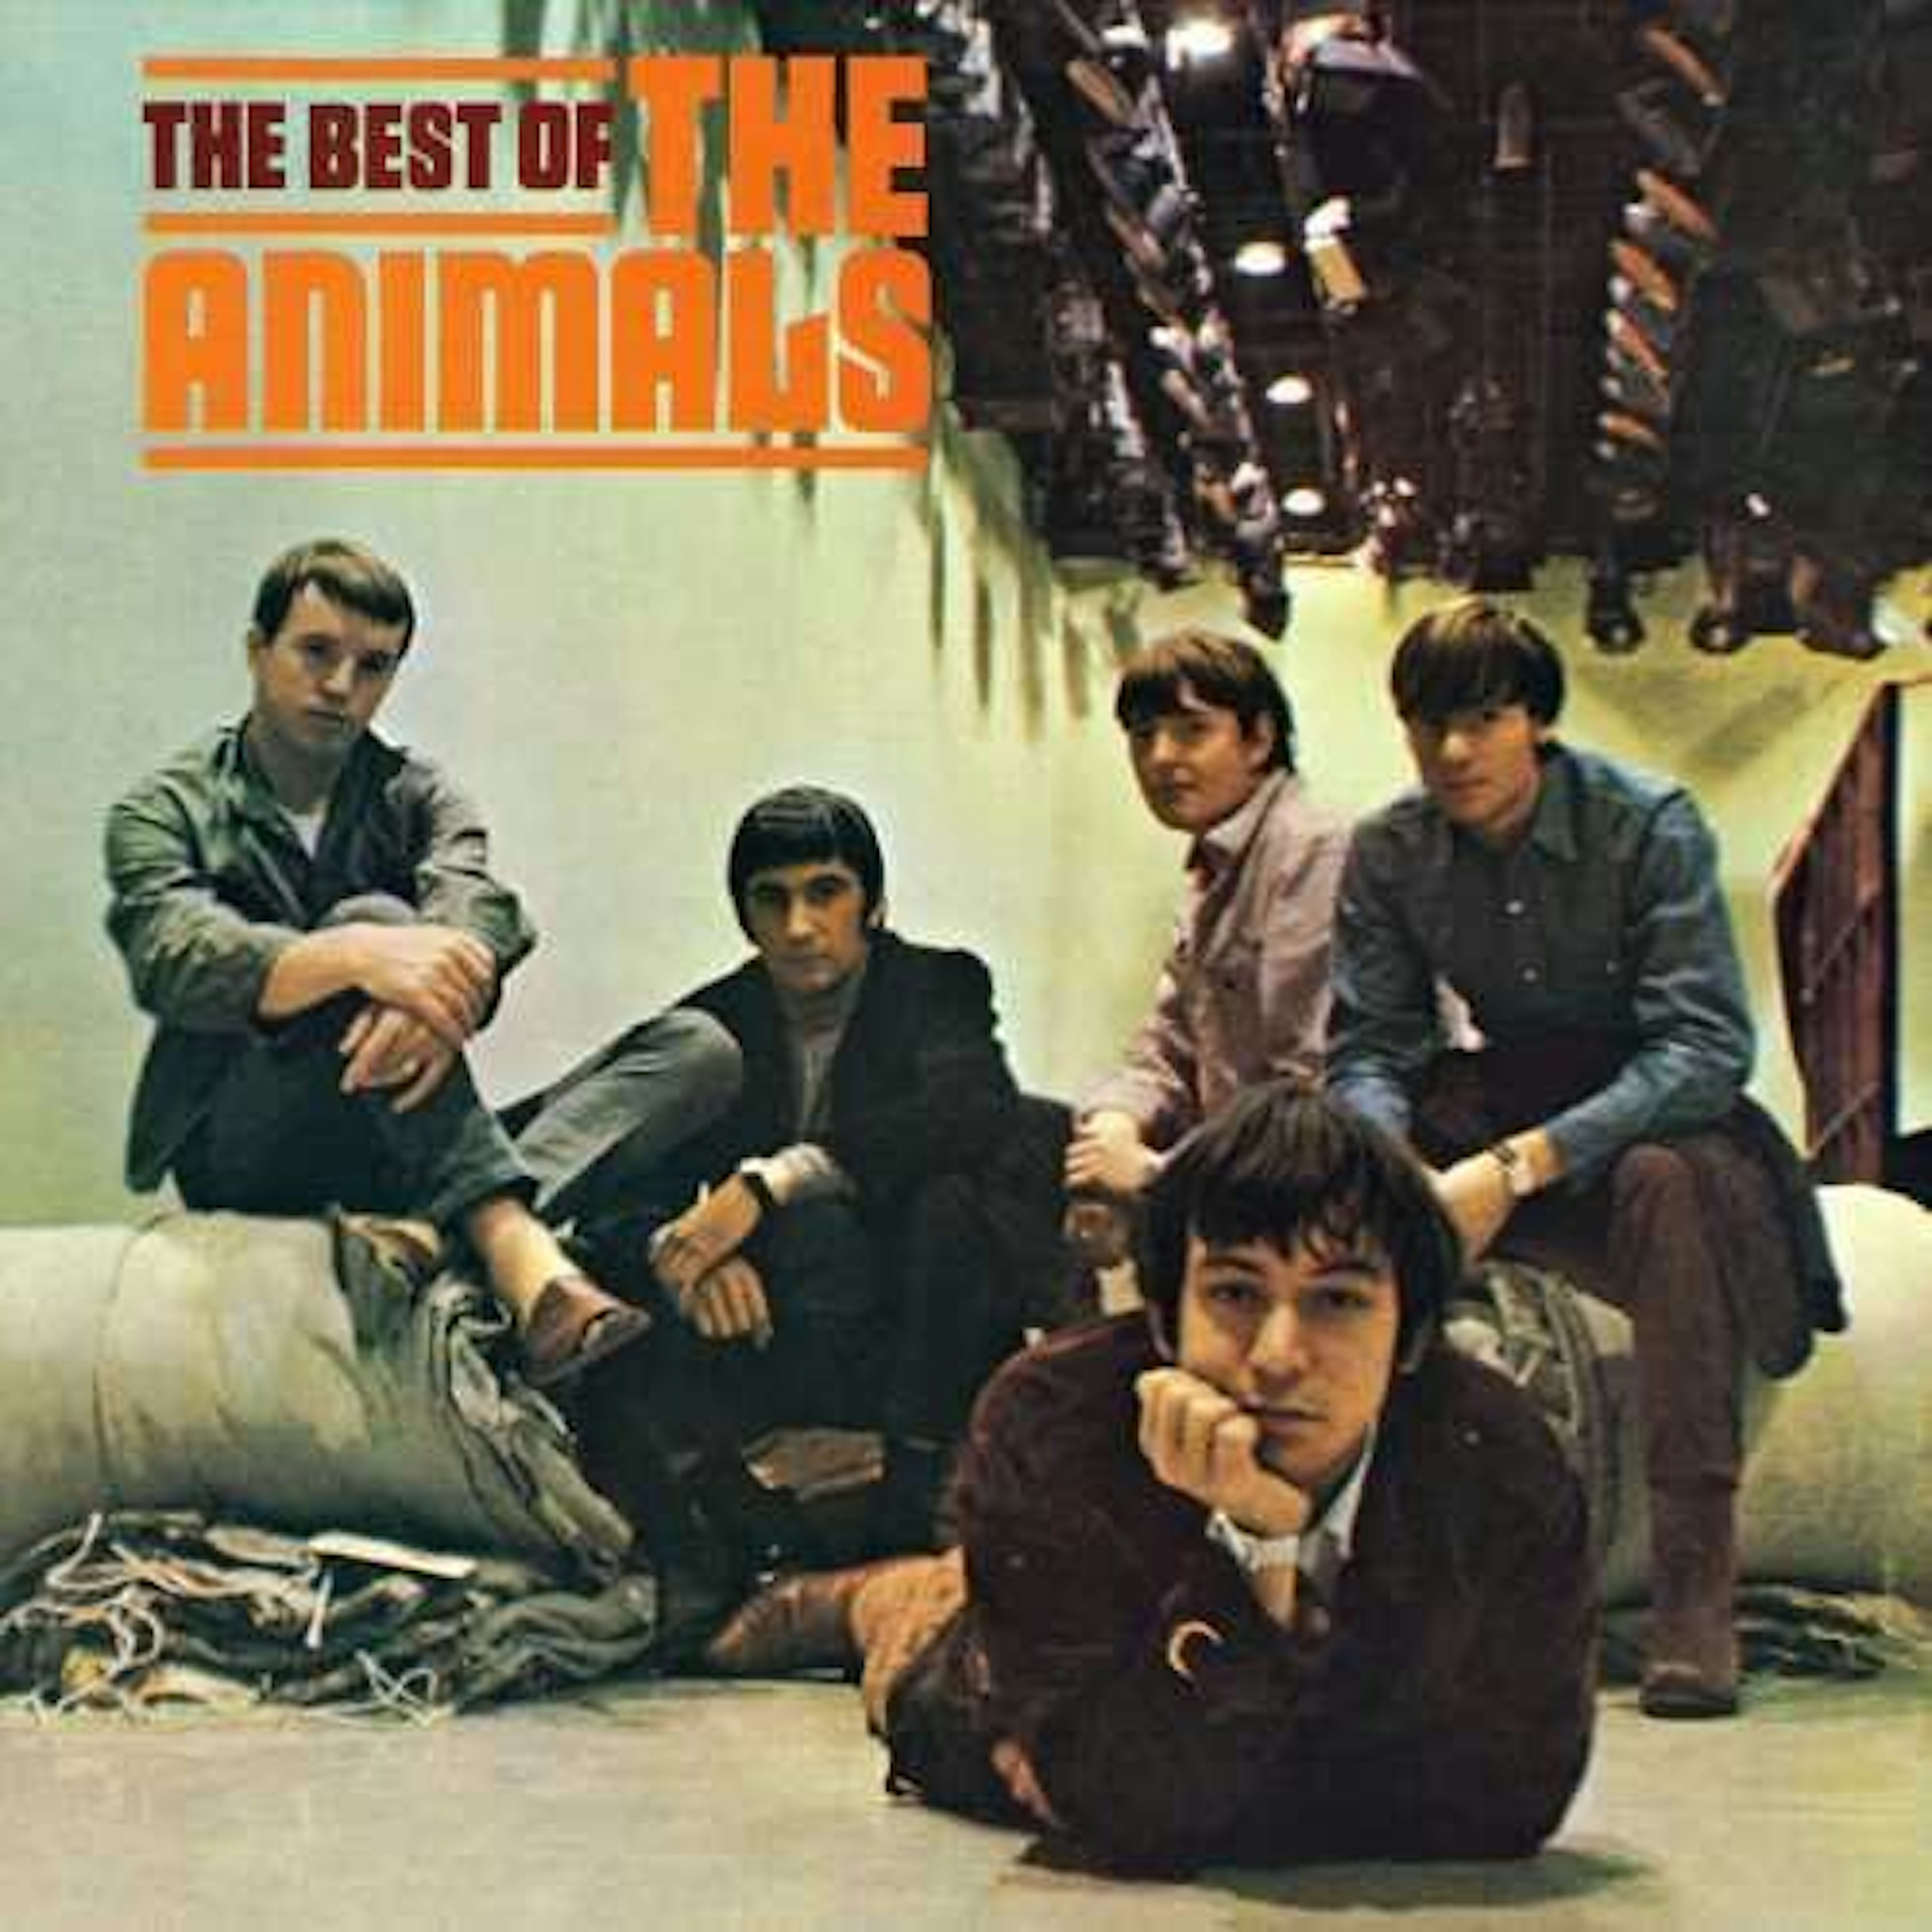 BEST OF THE ANIMALS Vinyl Record